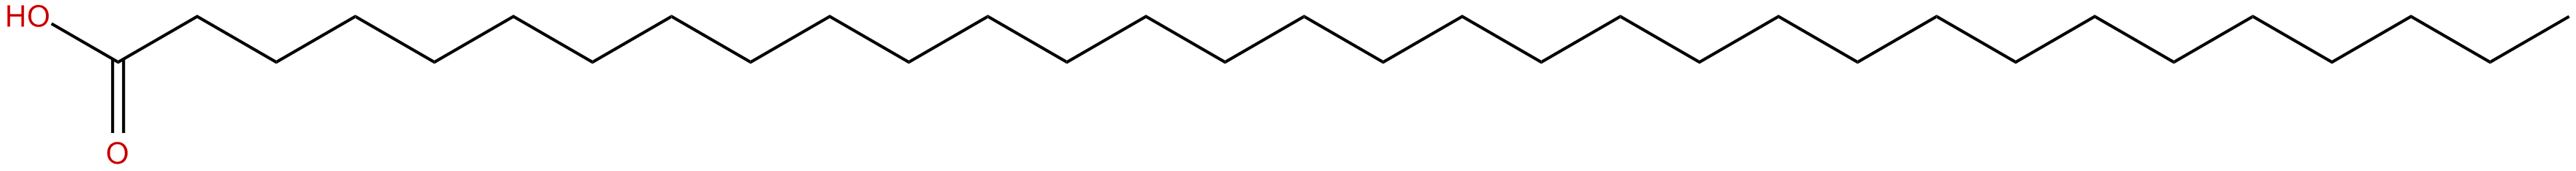 Image of dotriacontanoic acid